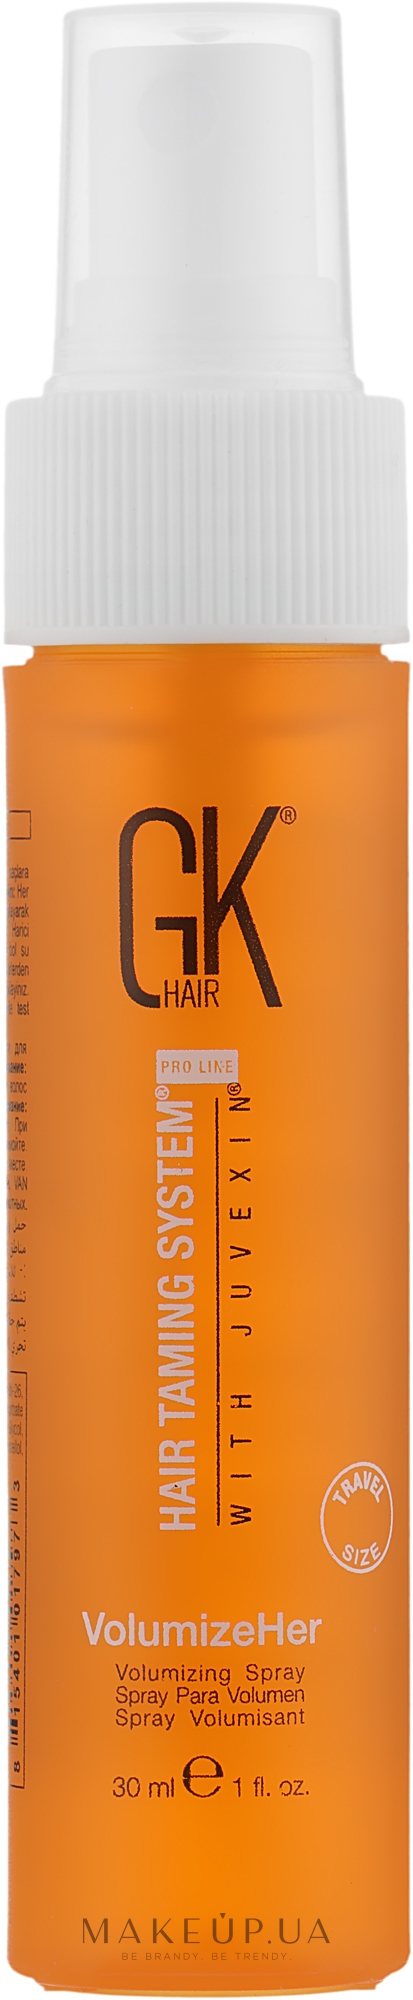 Спрей для волос с эффектом прикорневого объема - GKhair Volumize Her Spray With Juvexin — фото 30ml